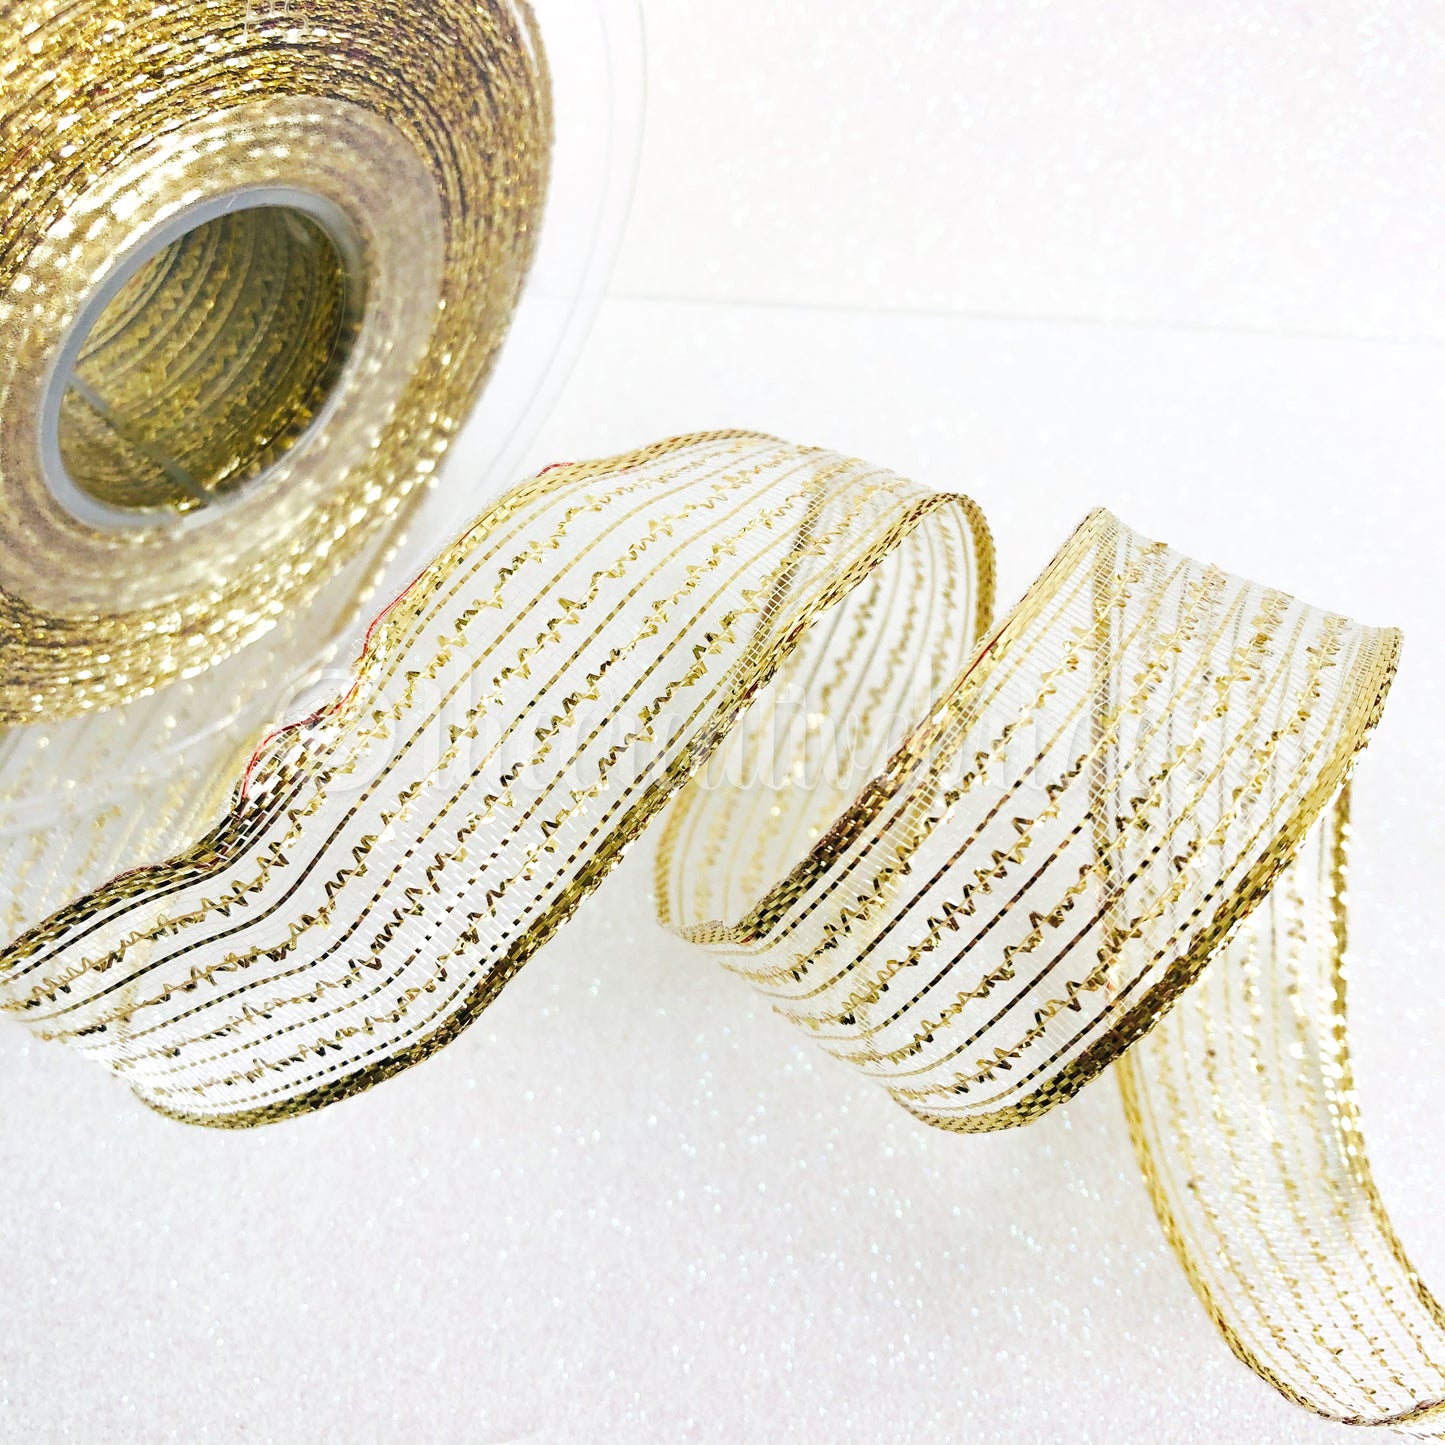 Berisfords Gold Metallic Sparkly Wired Ribbon 1M Cut Piece